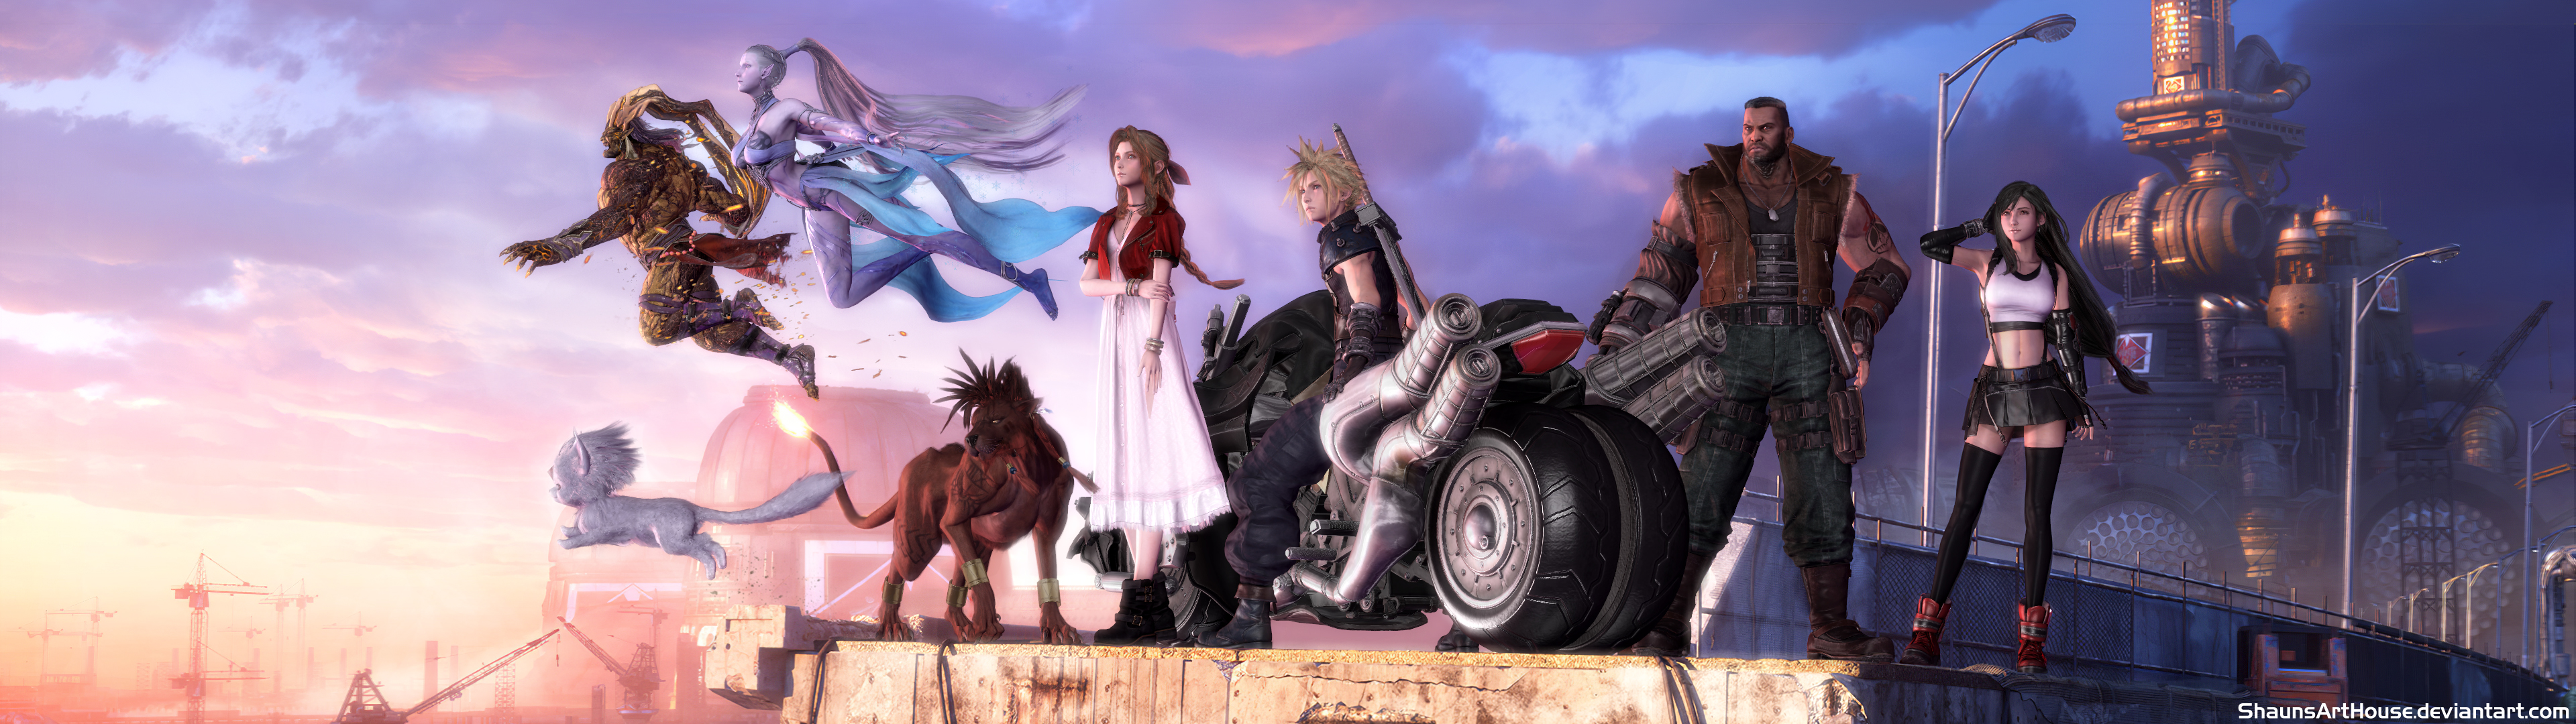 Final Fantasy 7 Remake Dual Screen Wallpaper By Shaunsarthouse On Deviantart